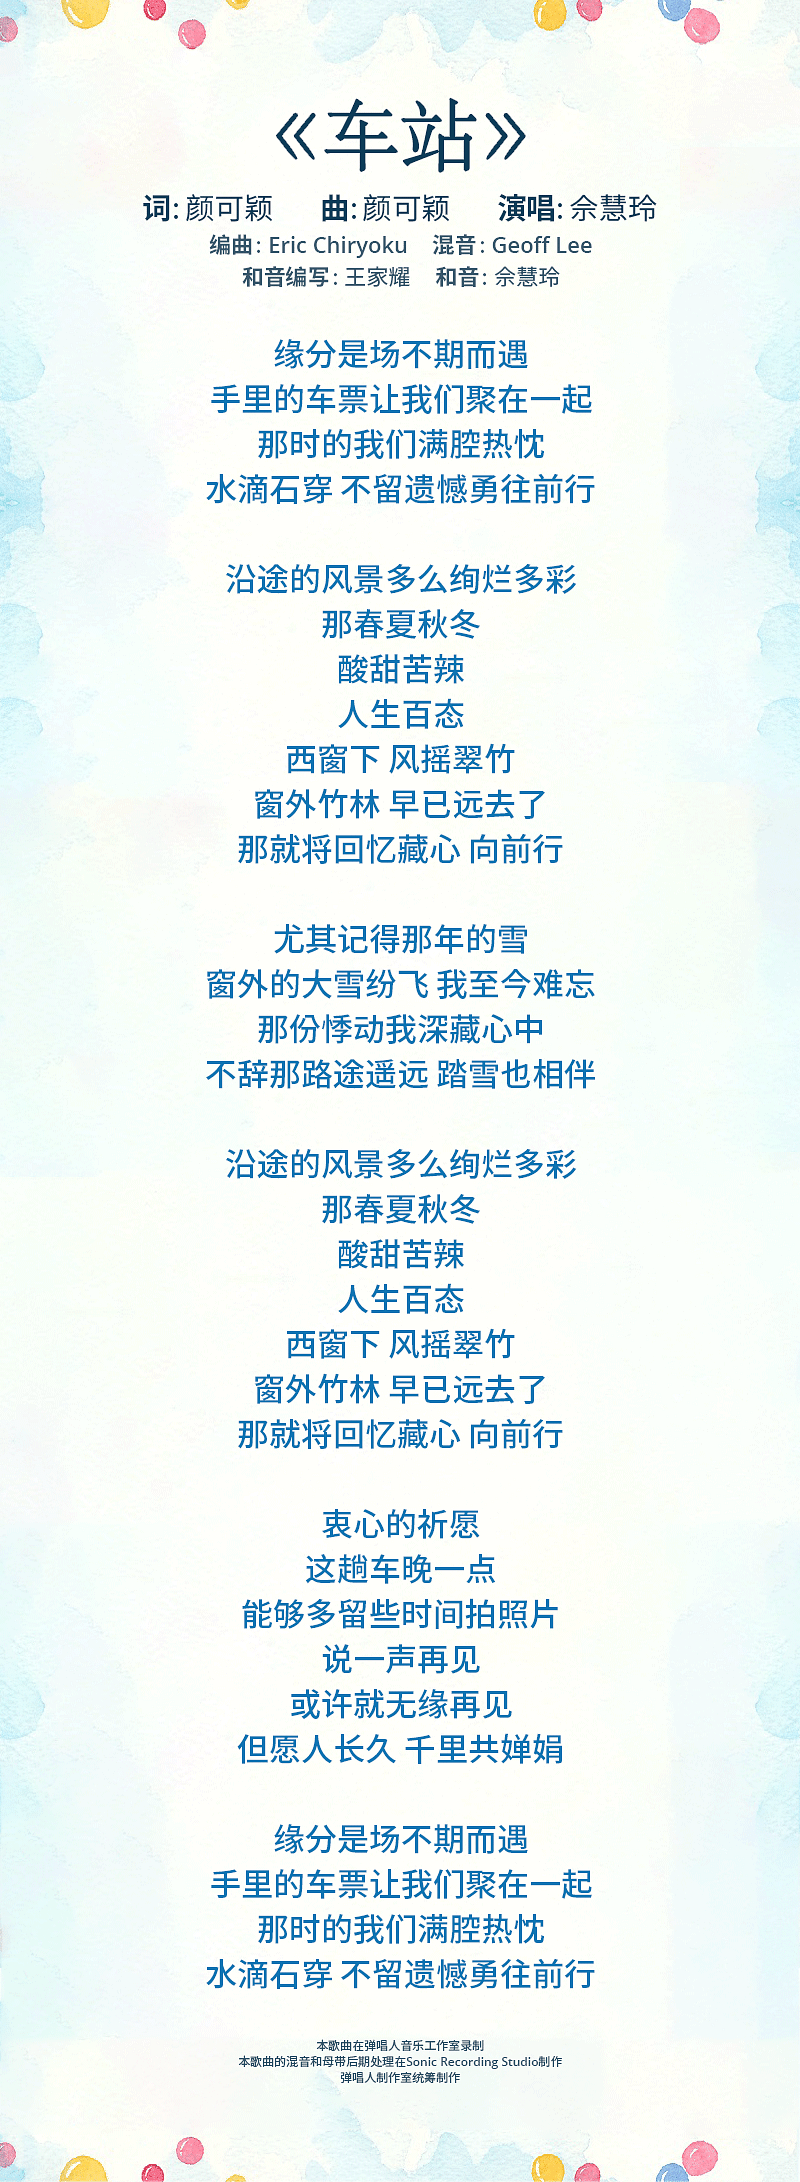 che-zhan-lyrics-mobile.png